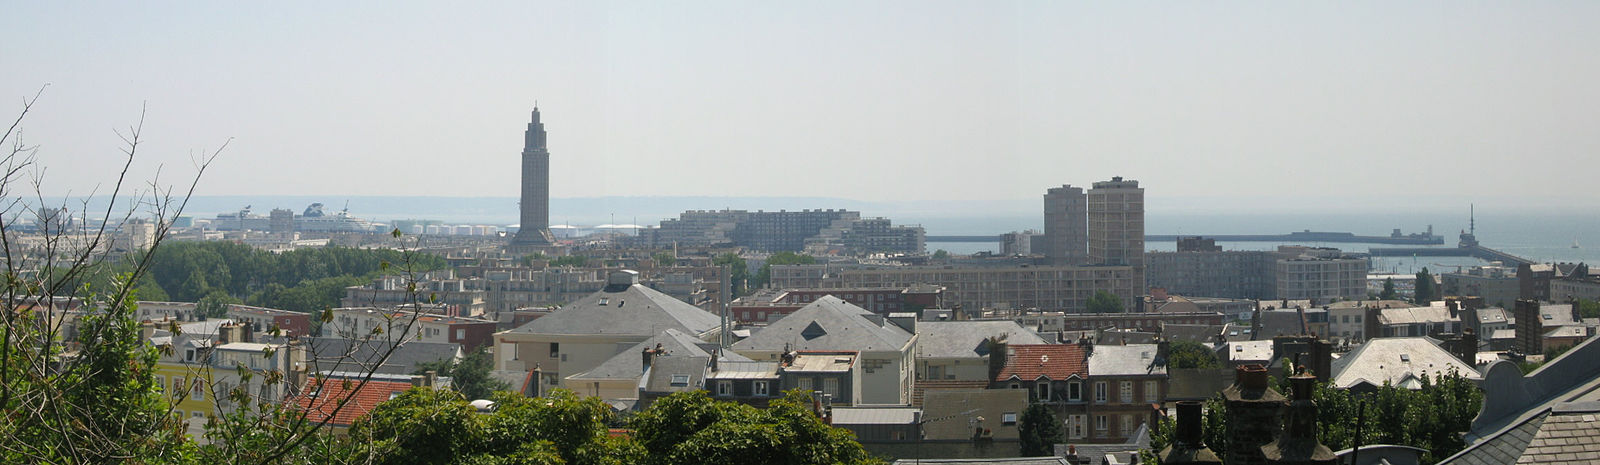 Le Havre skyline in 2005